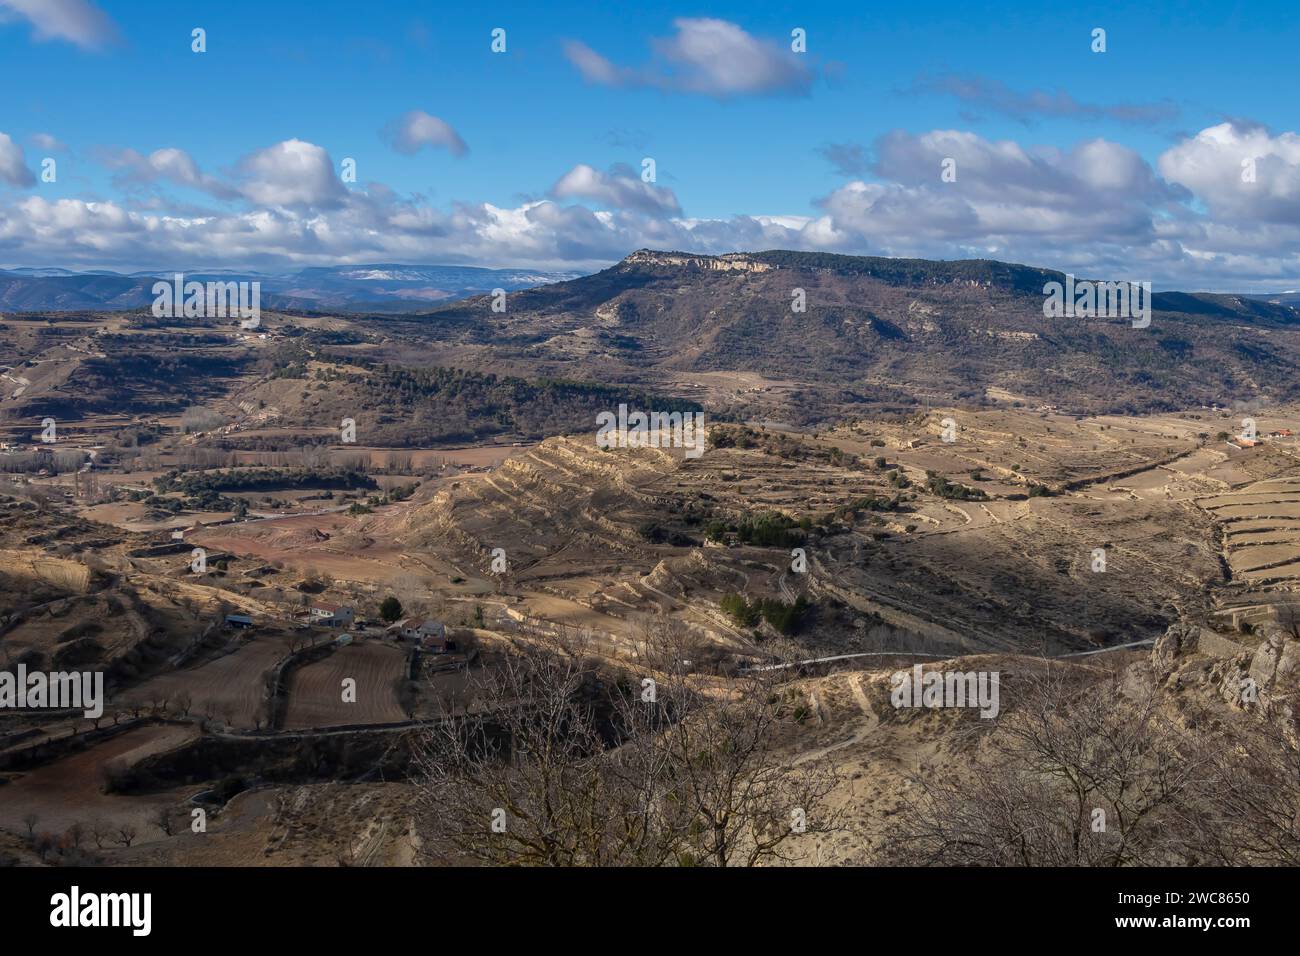 Mediterranean Landscape from Morella village in Castellon province, Spain Stock Photo